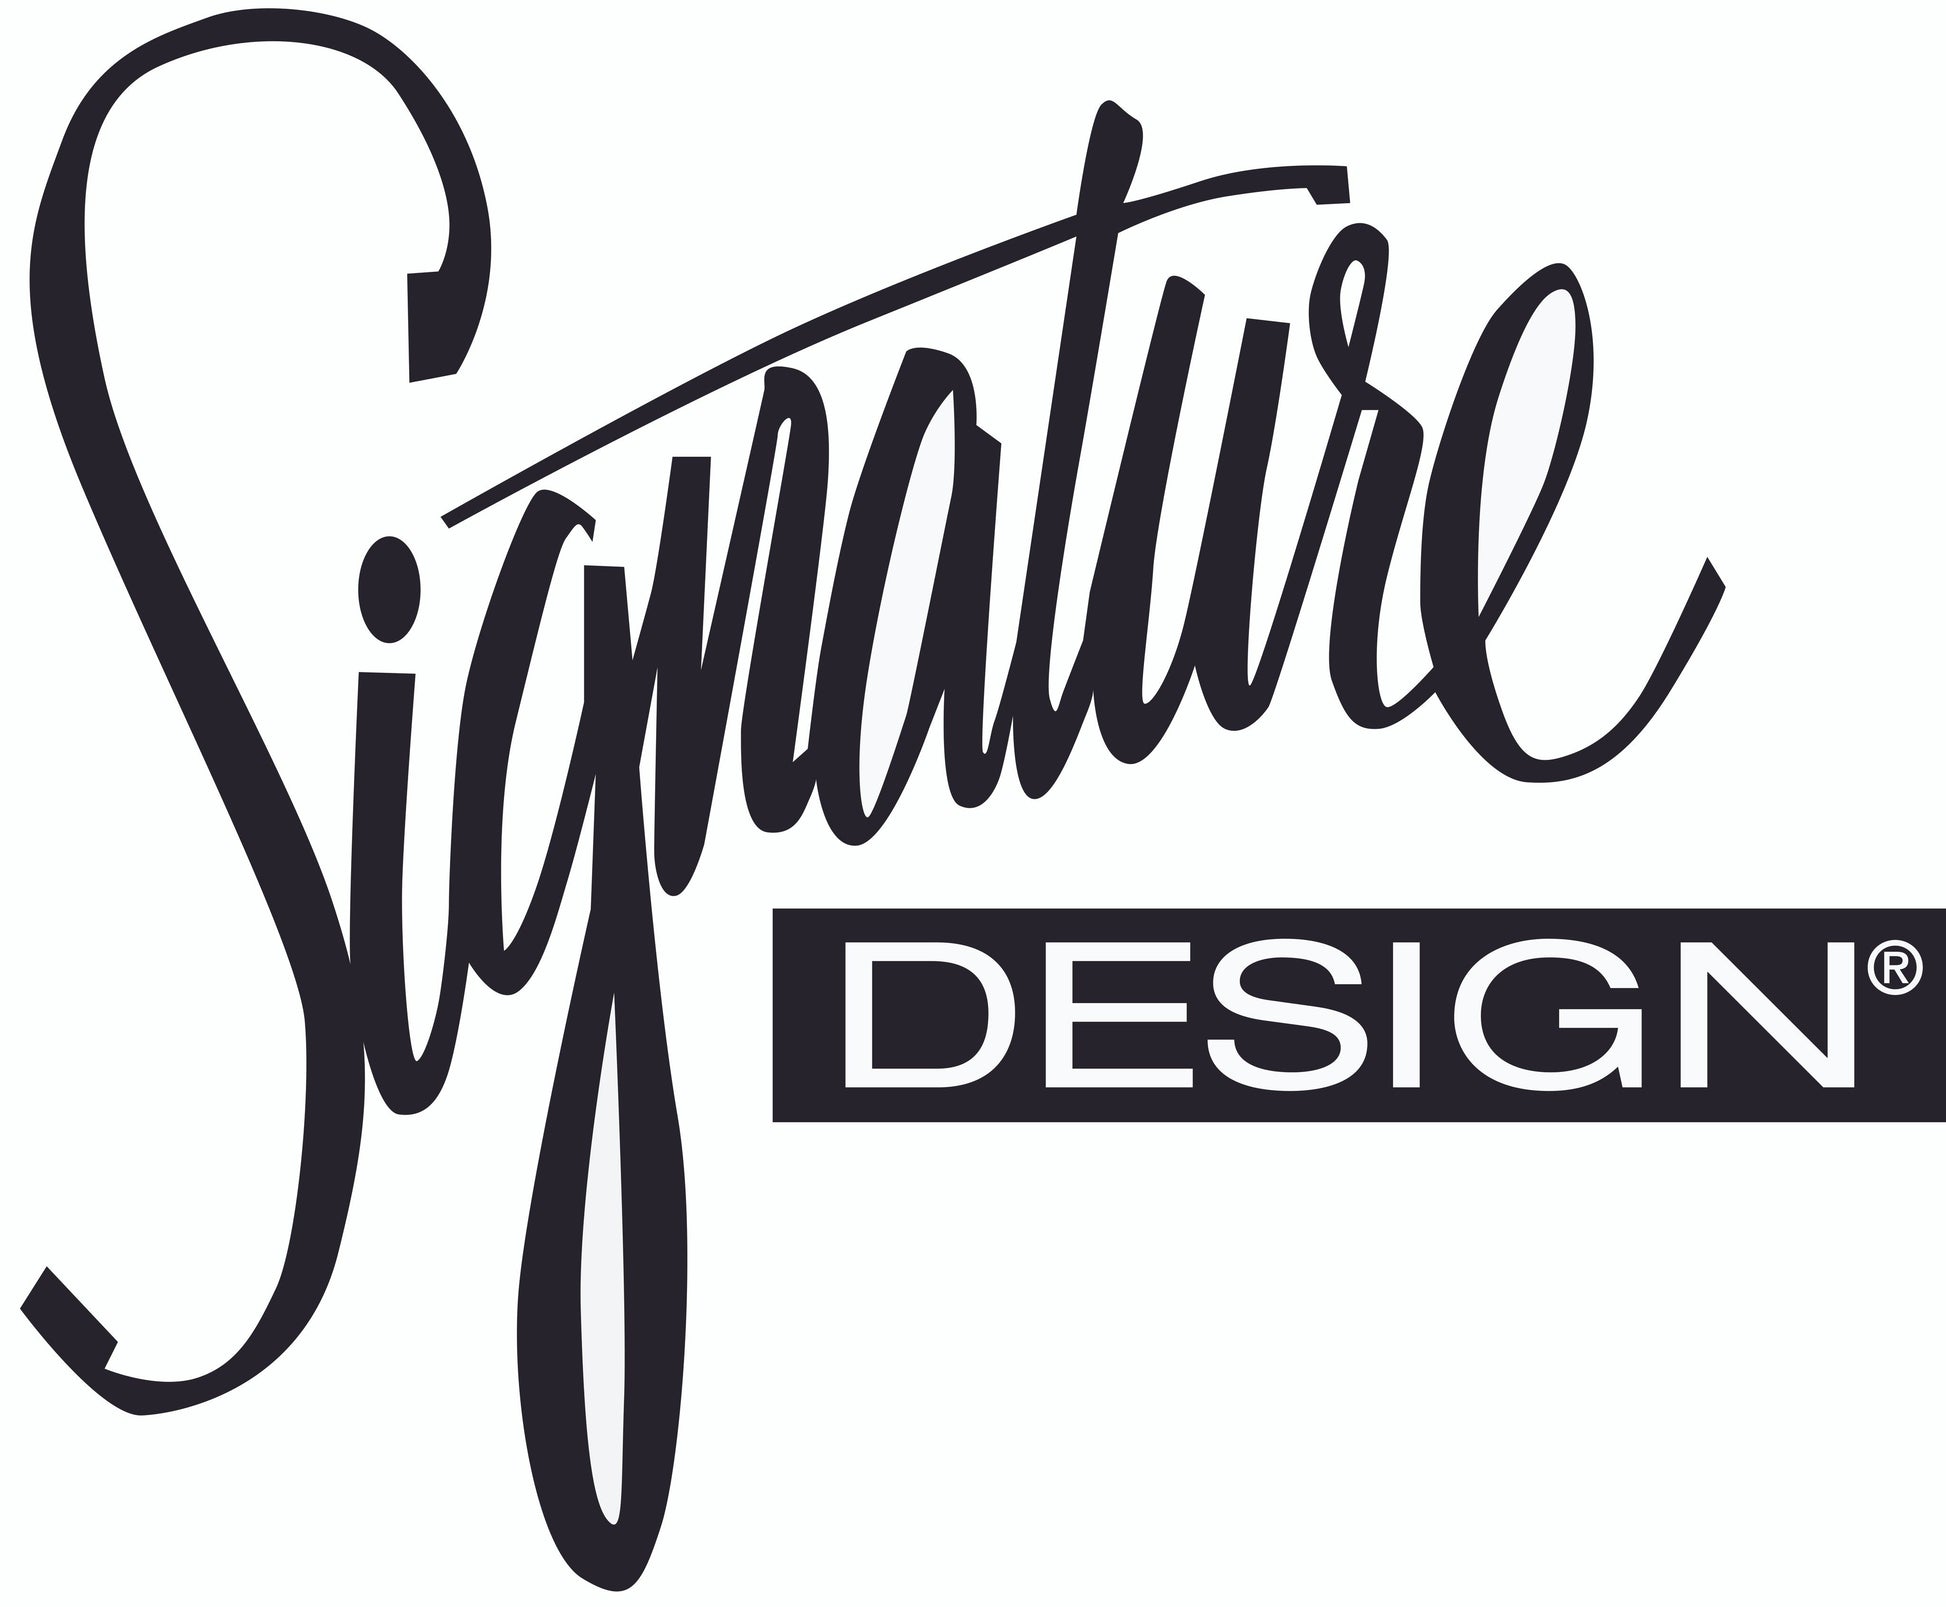 Colleton Sofa Signature Design by Ashley®